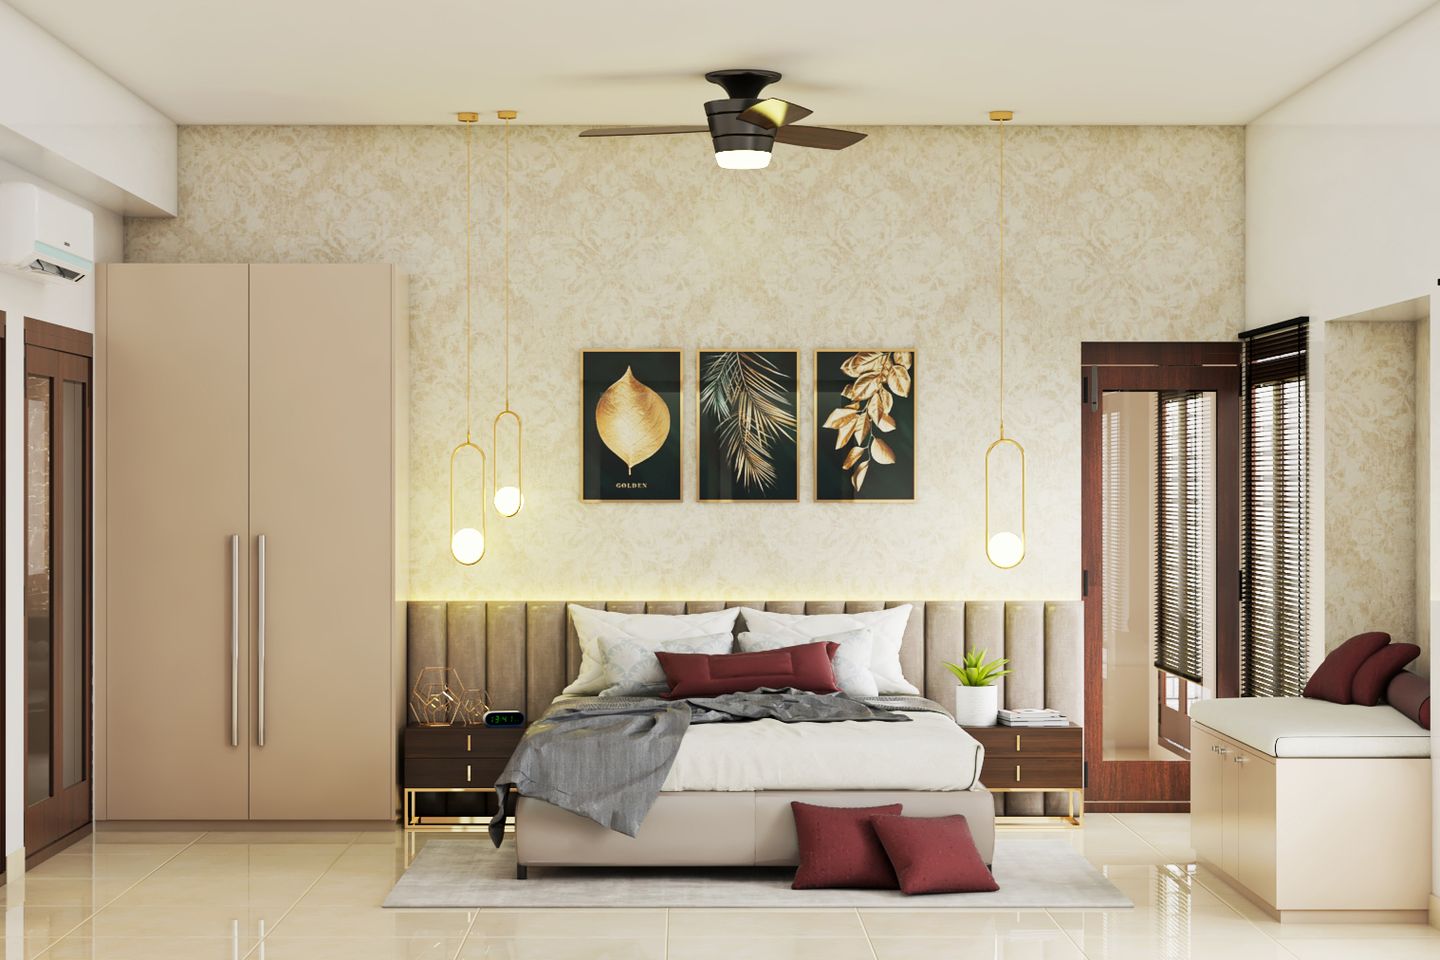 Damask Bedroom Wallpaper Design In Beige And Off-White - Livspace